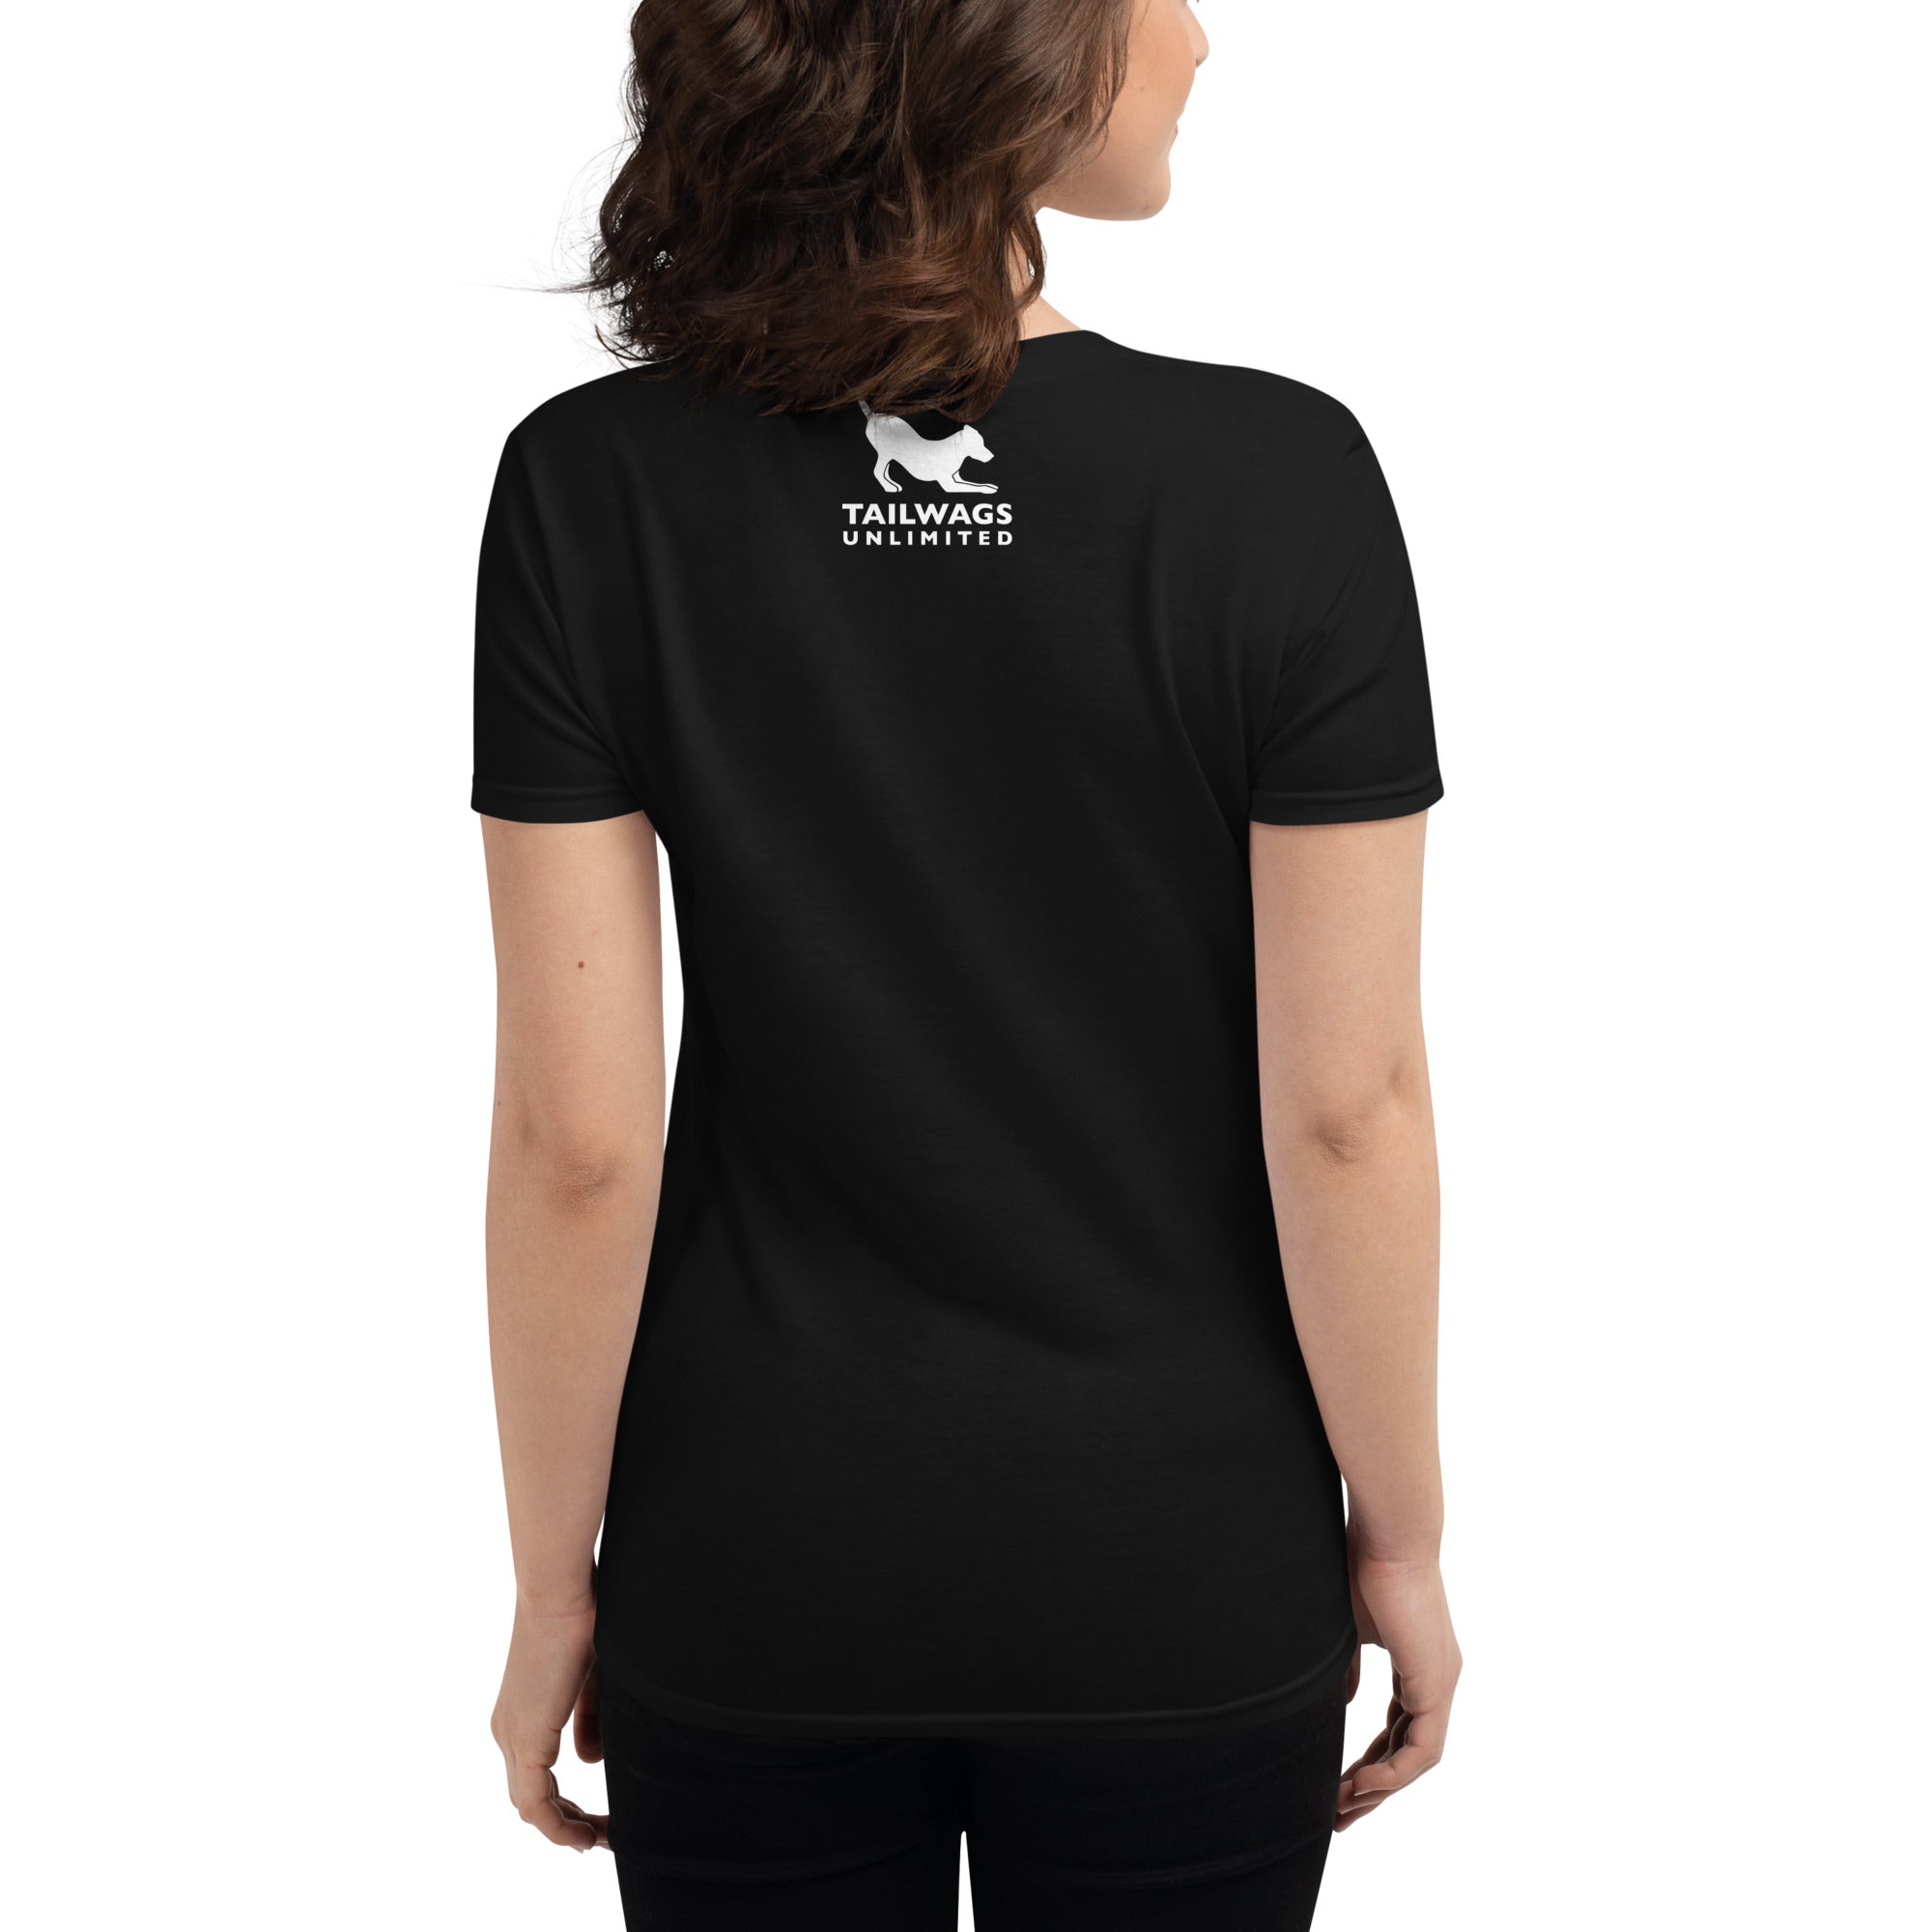 Corgi Butt Women's Fit T-Shirt - TAILWAGS UNLIMITED